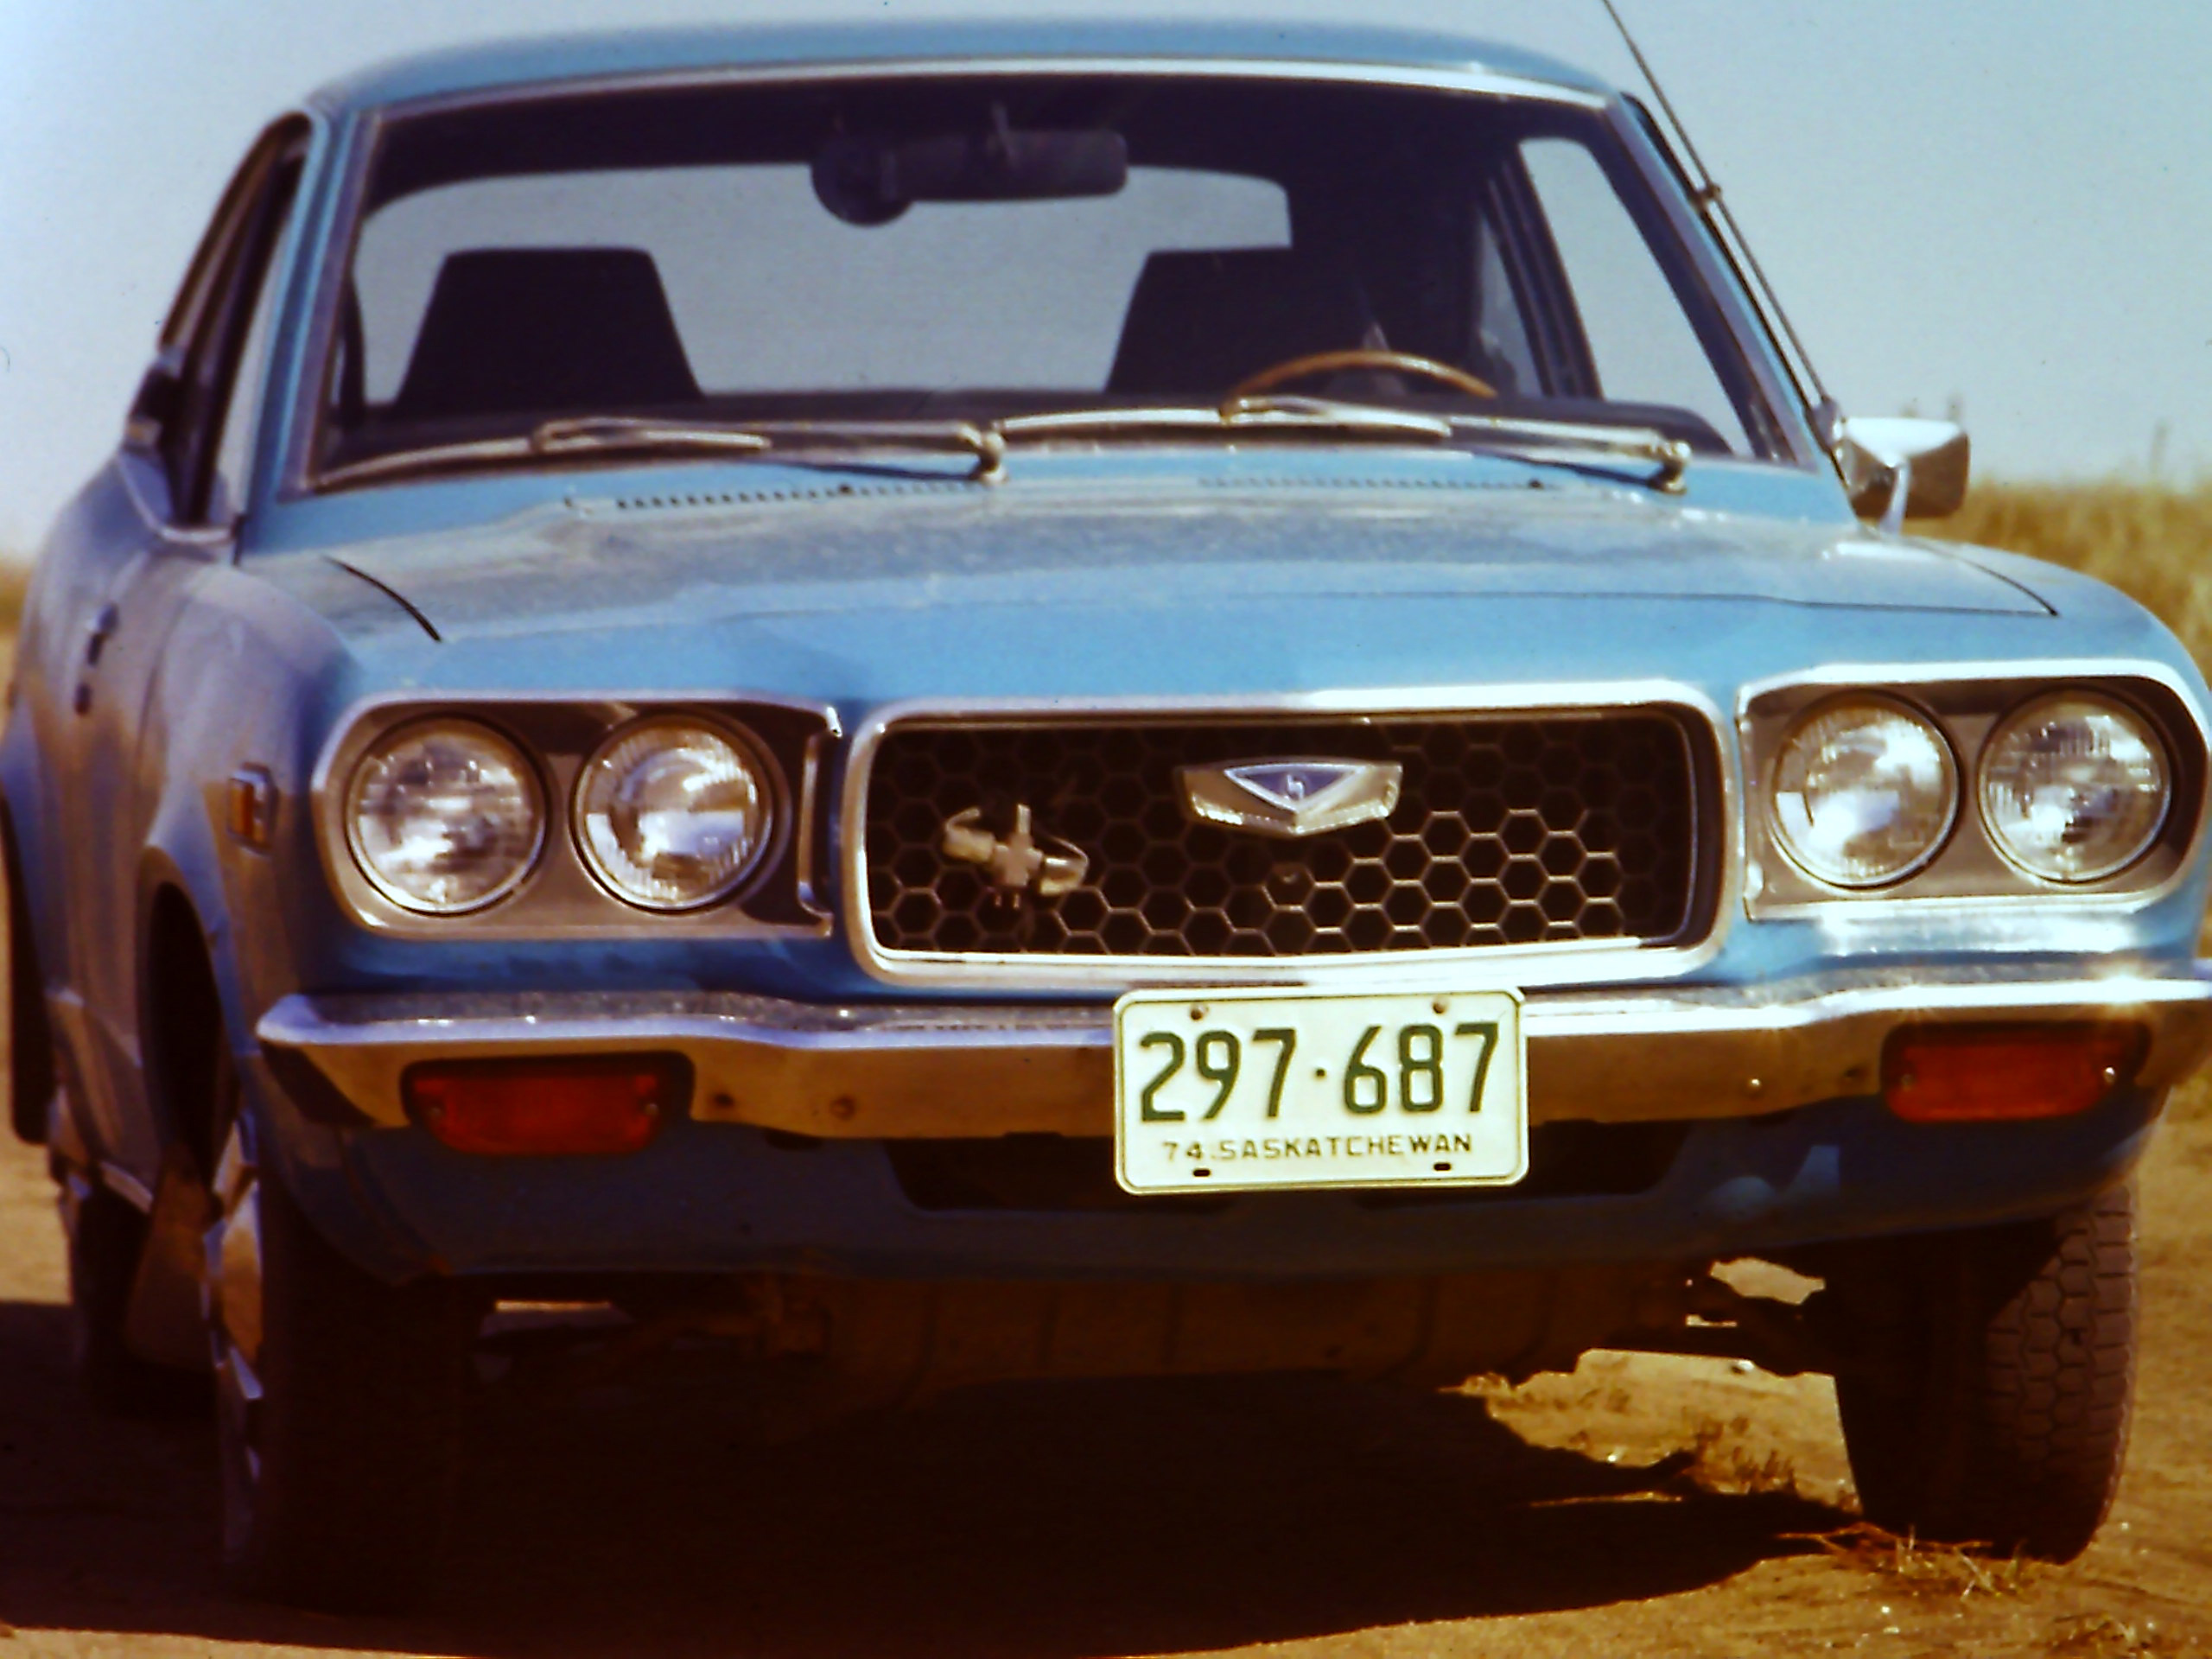 1972 Mazda 808 Coupe | Flickr - Photo Sharing!